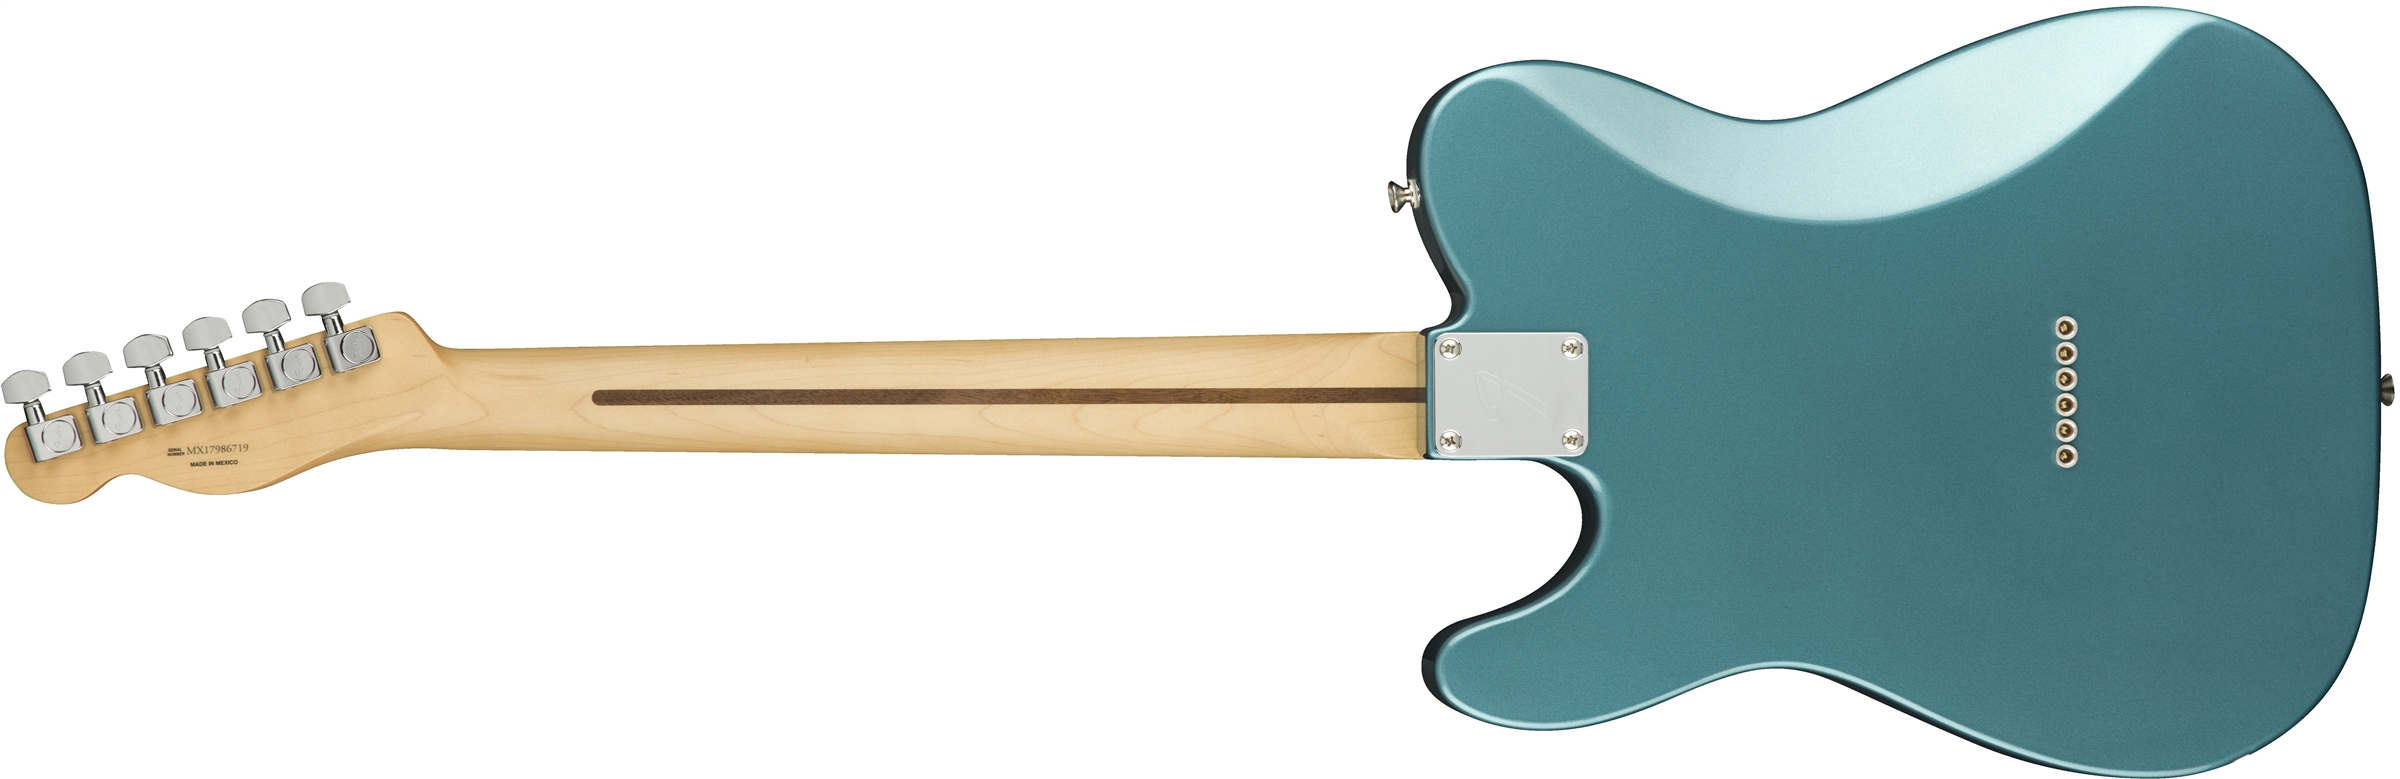 Fender Tele Player Mex Hh Mn - Tidepool - Tel shape electric guitar - Variation 1